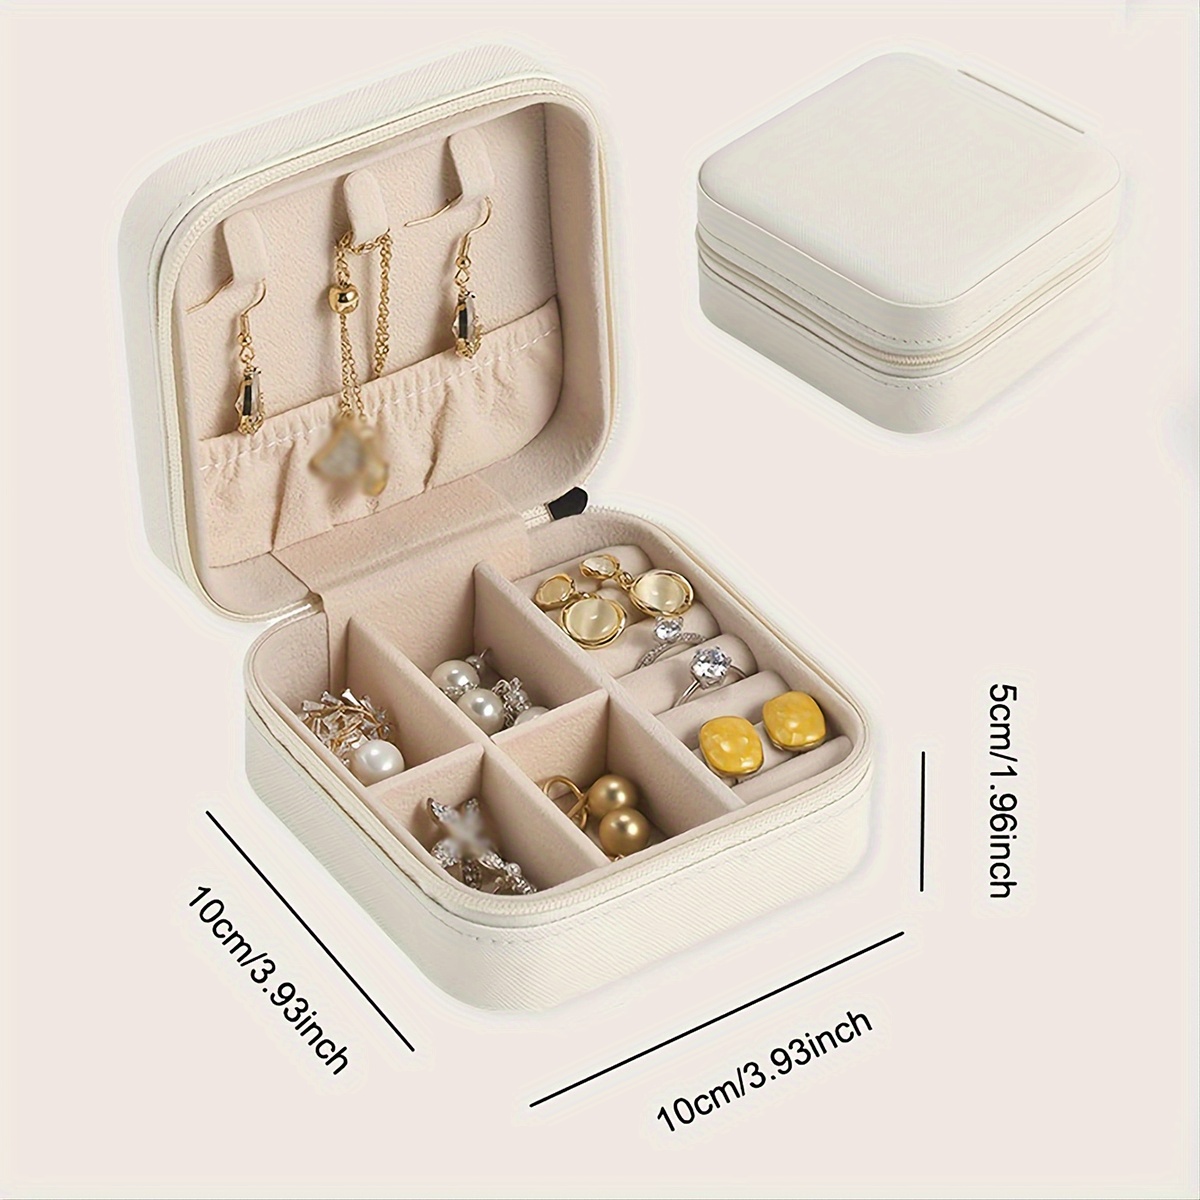  YSM Designs Travel Jewelry Organizer Box, Travel Jewelry Case, Small Jewelry Box for Women, Jewelry Travel Case